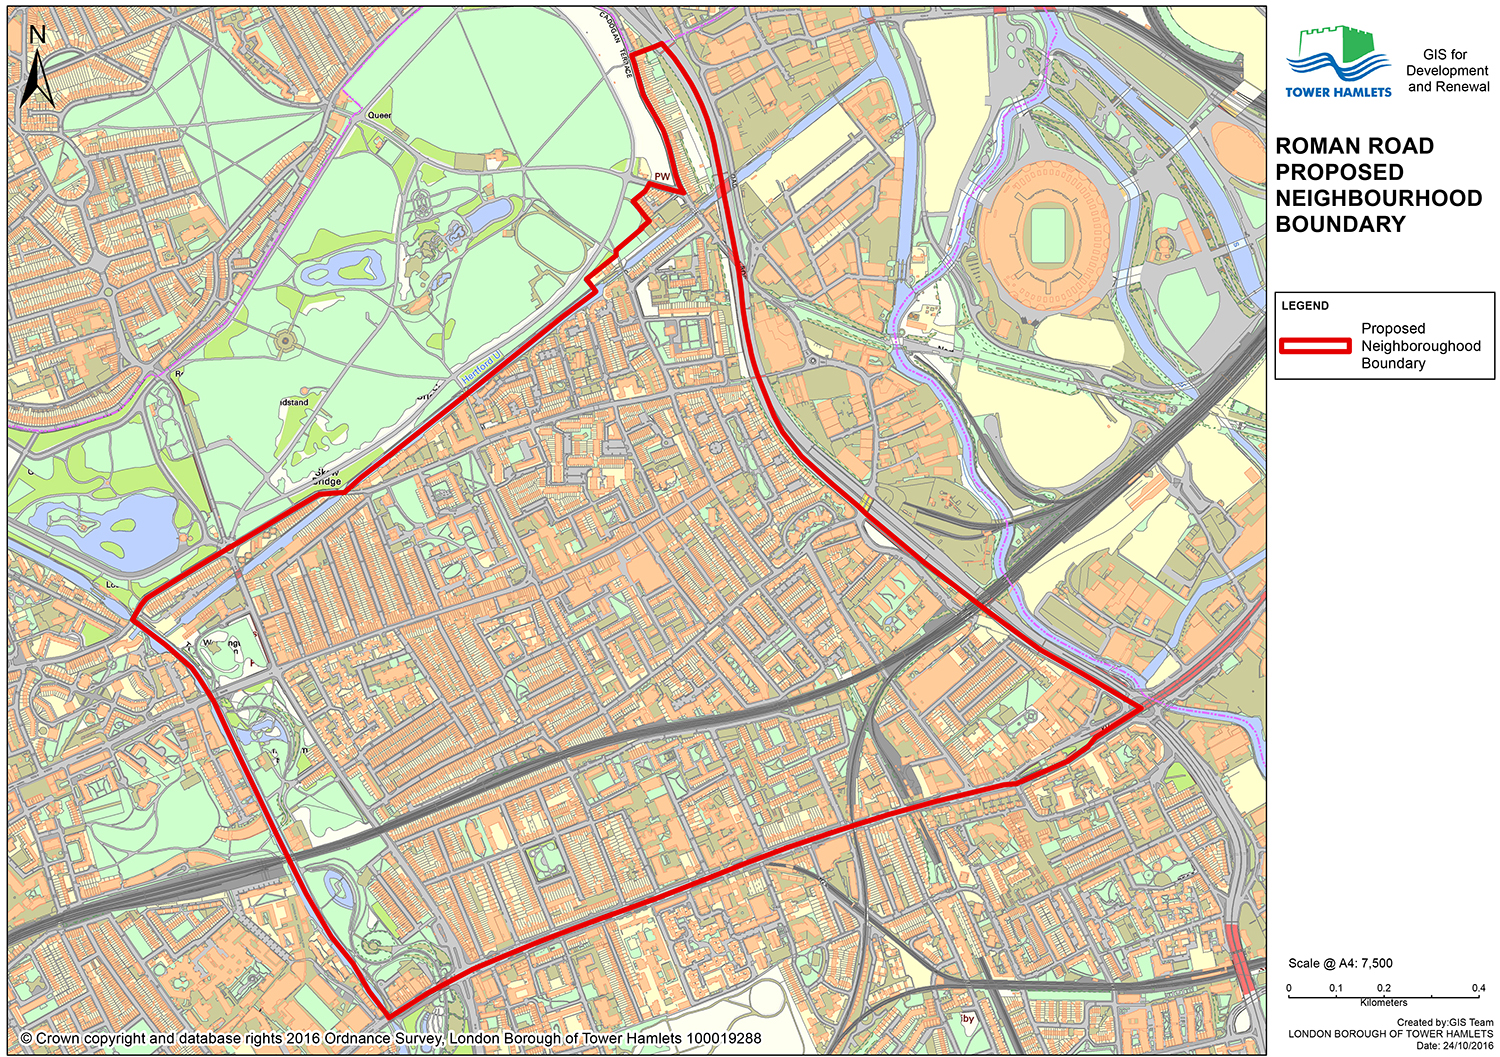 GIS map of Roman Road Neighbourhood Plan proposed area boundary